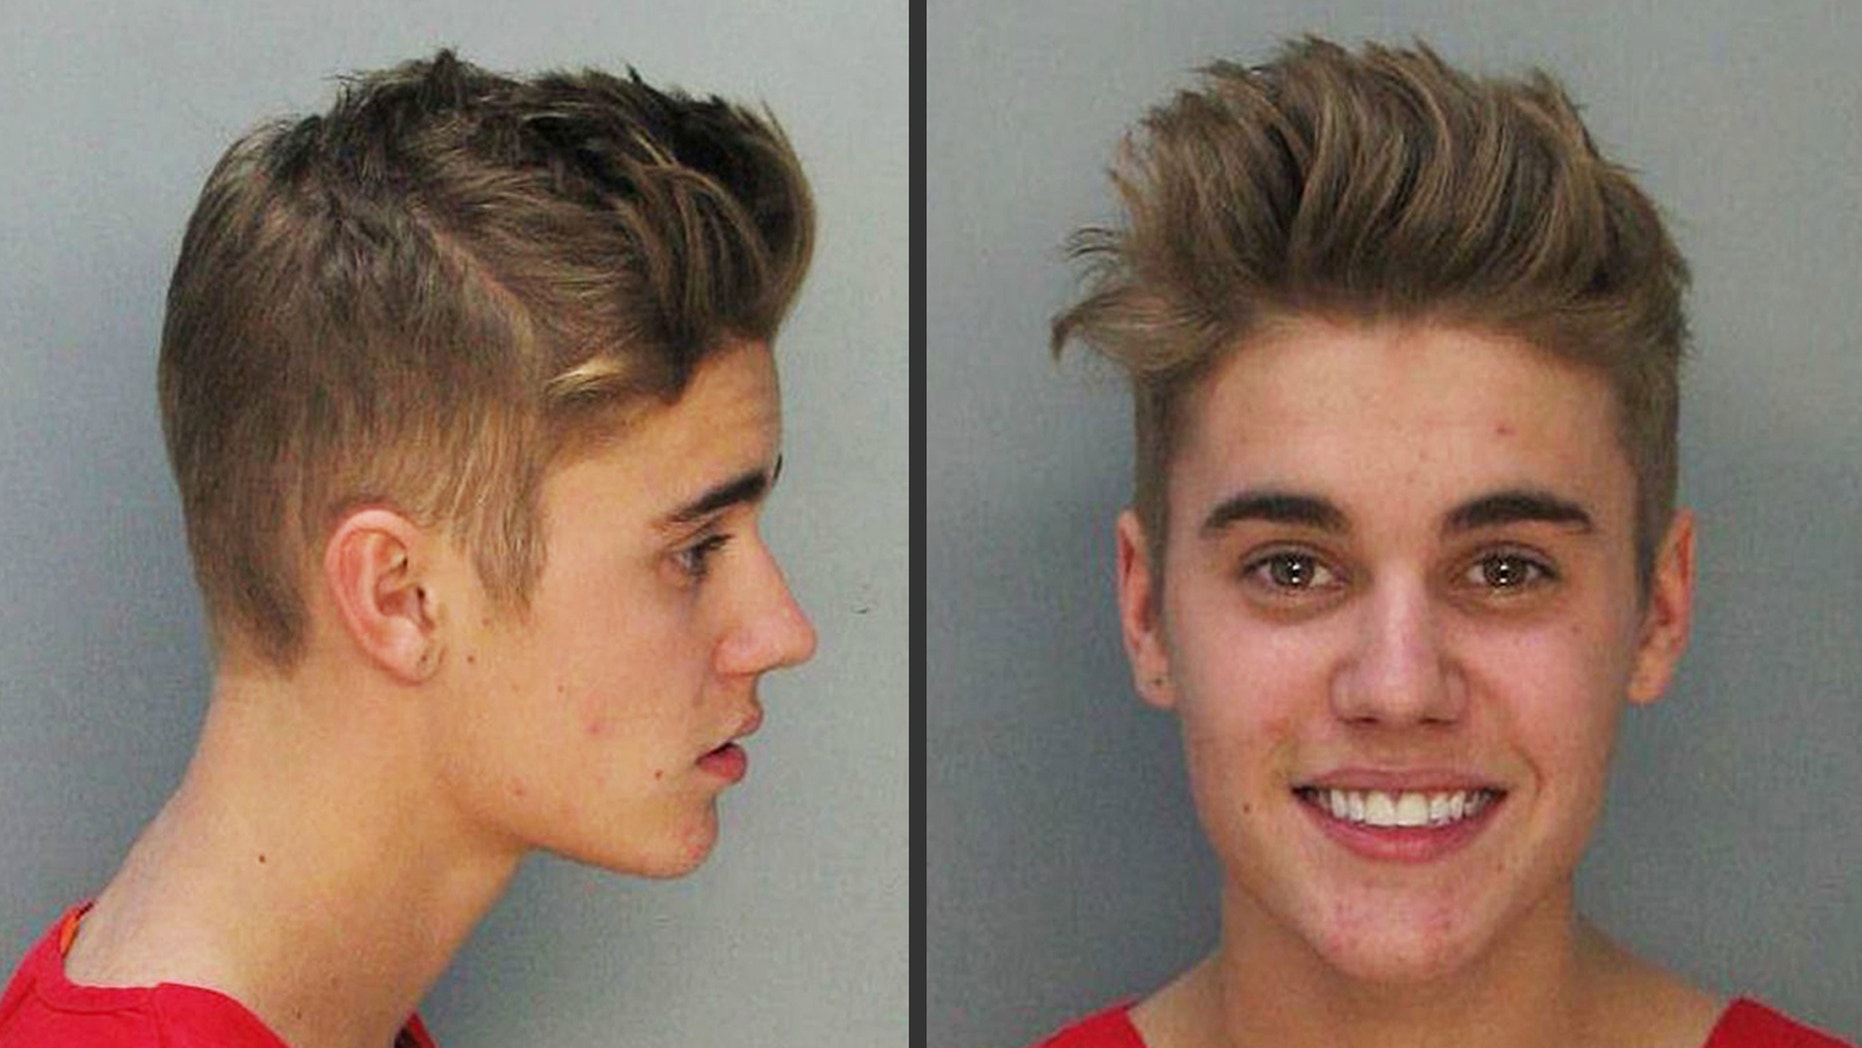 Prison ‘breakout’: Explaining Justin Bieber’s acne in his mug shot | Fox News